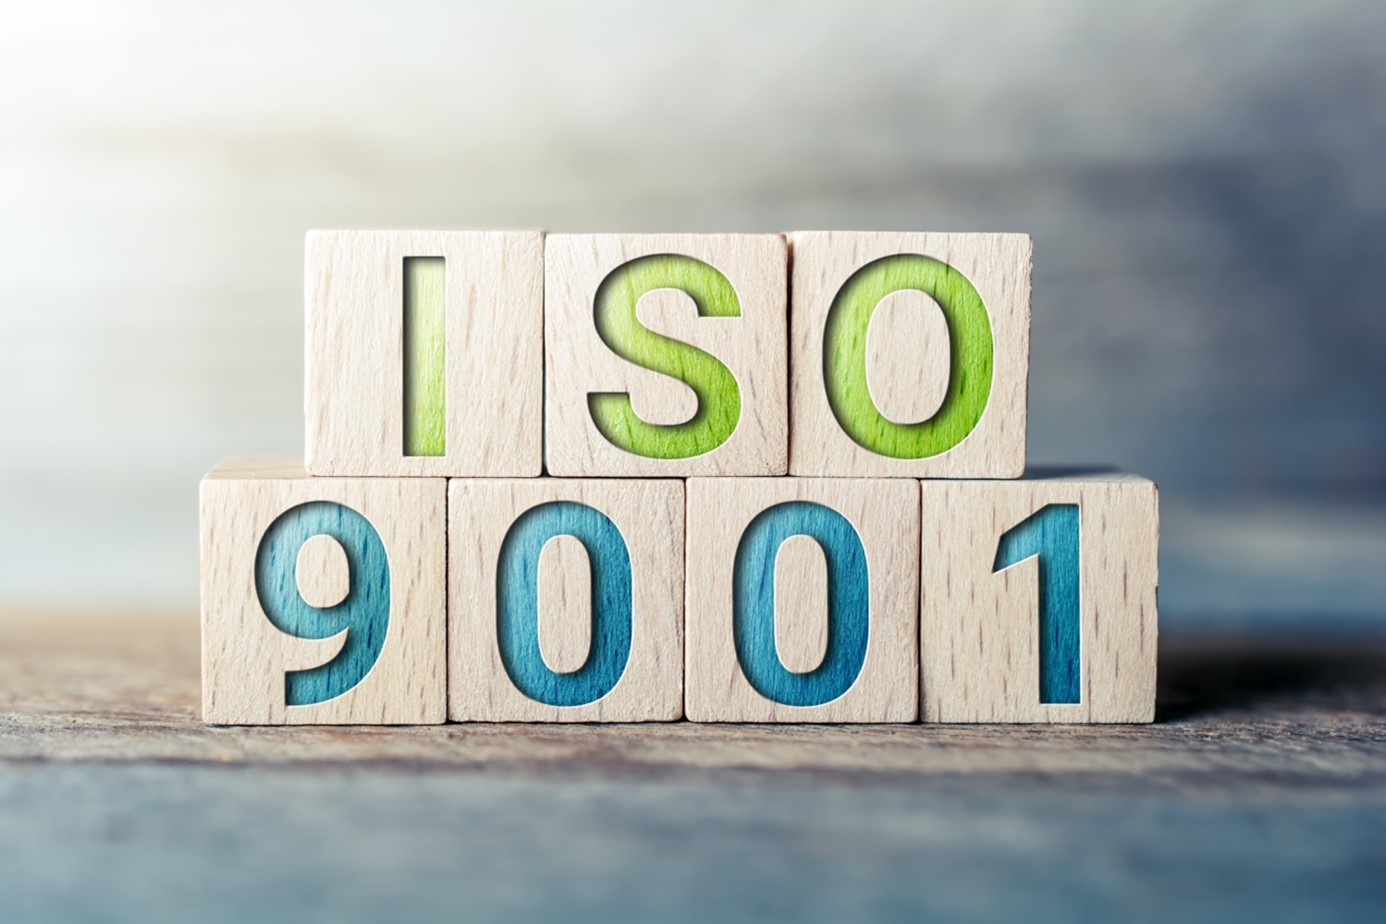 ISO 9001-certificering, kwaliteitsmanagementsysteem